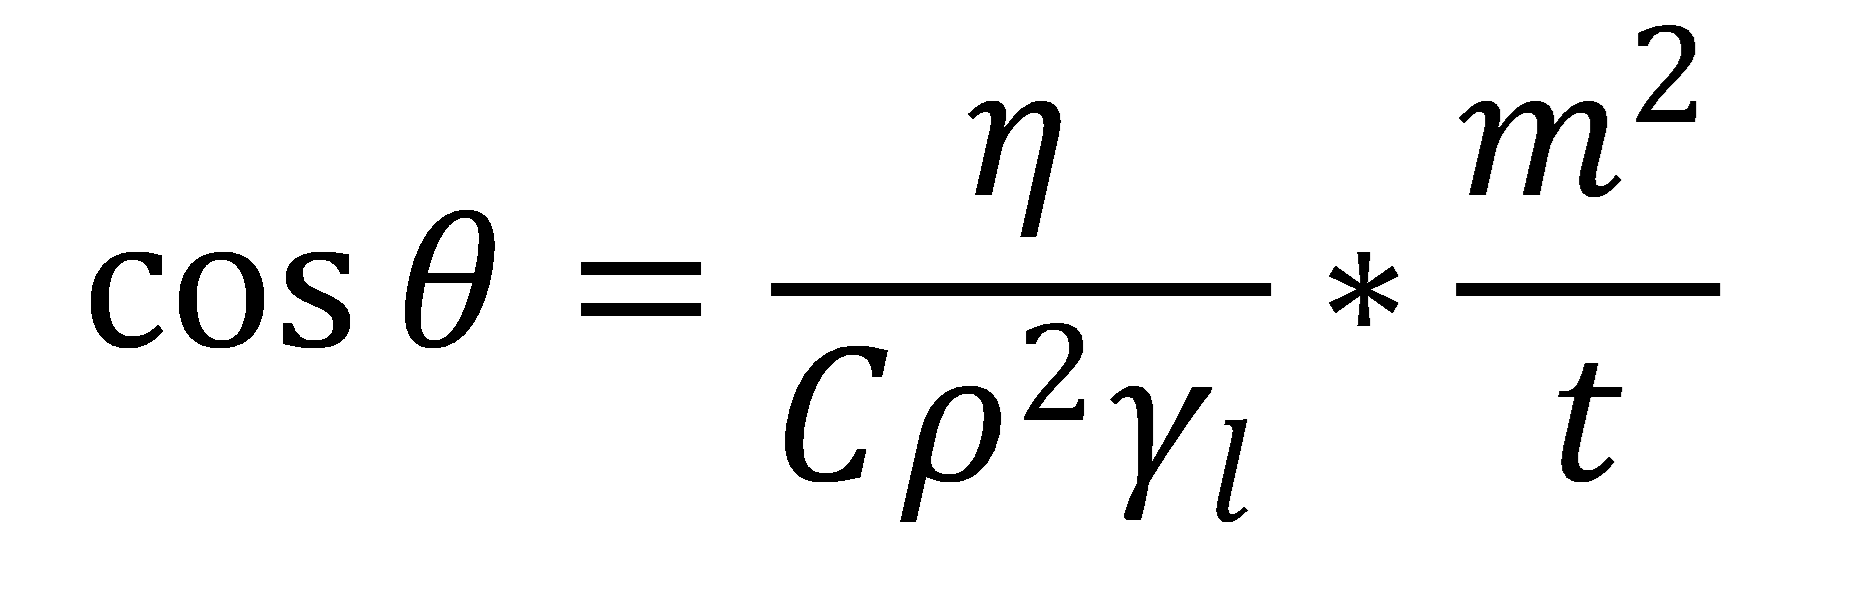 Washburn equation used for contact angle